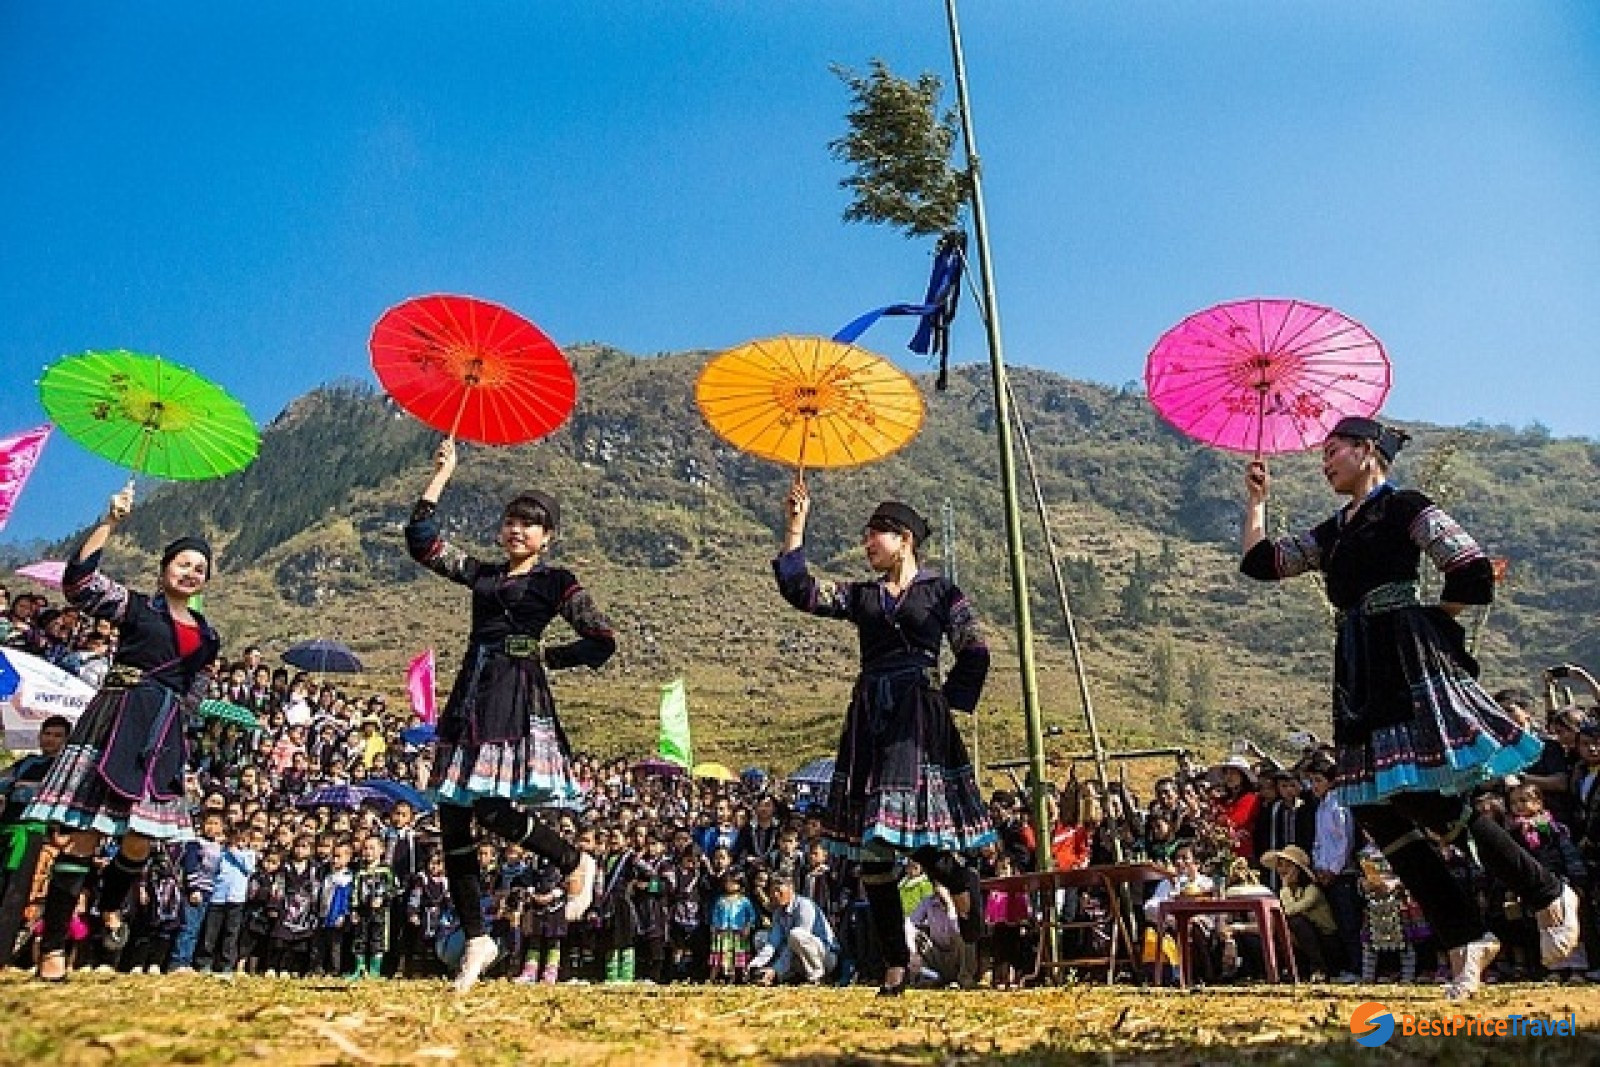 The Girls Dance in The Gau Tao Festival